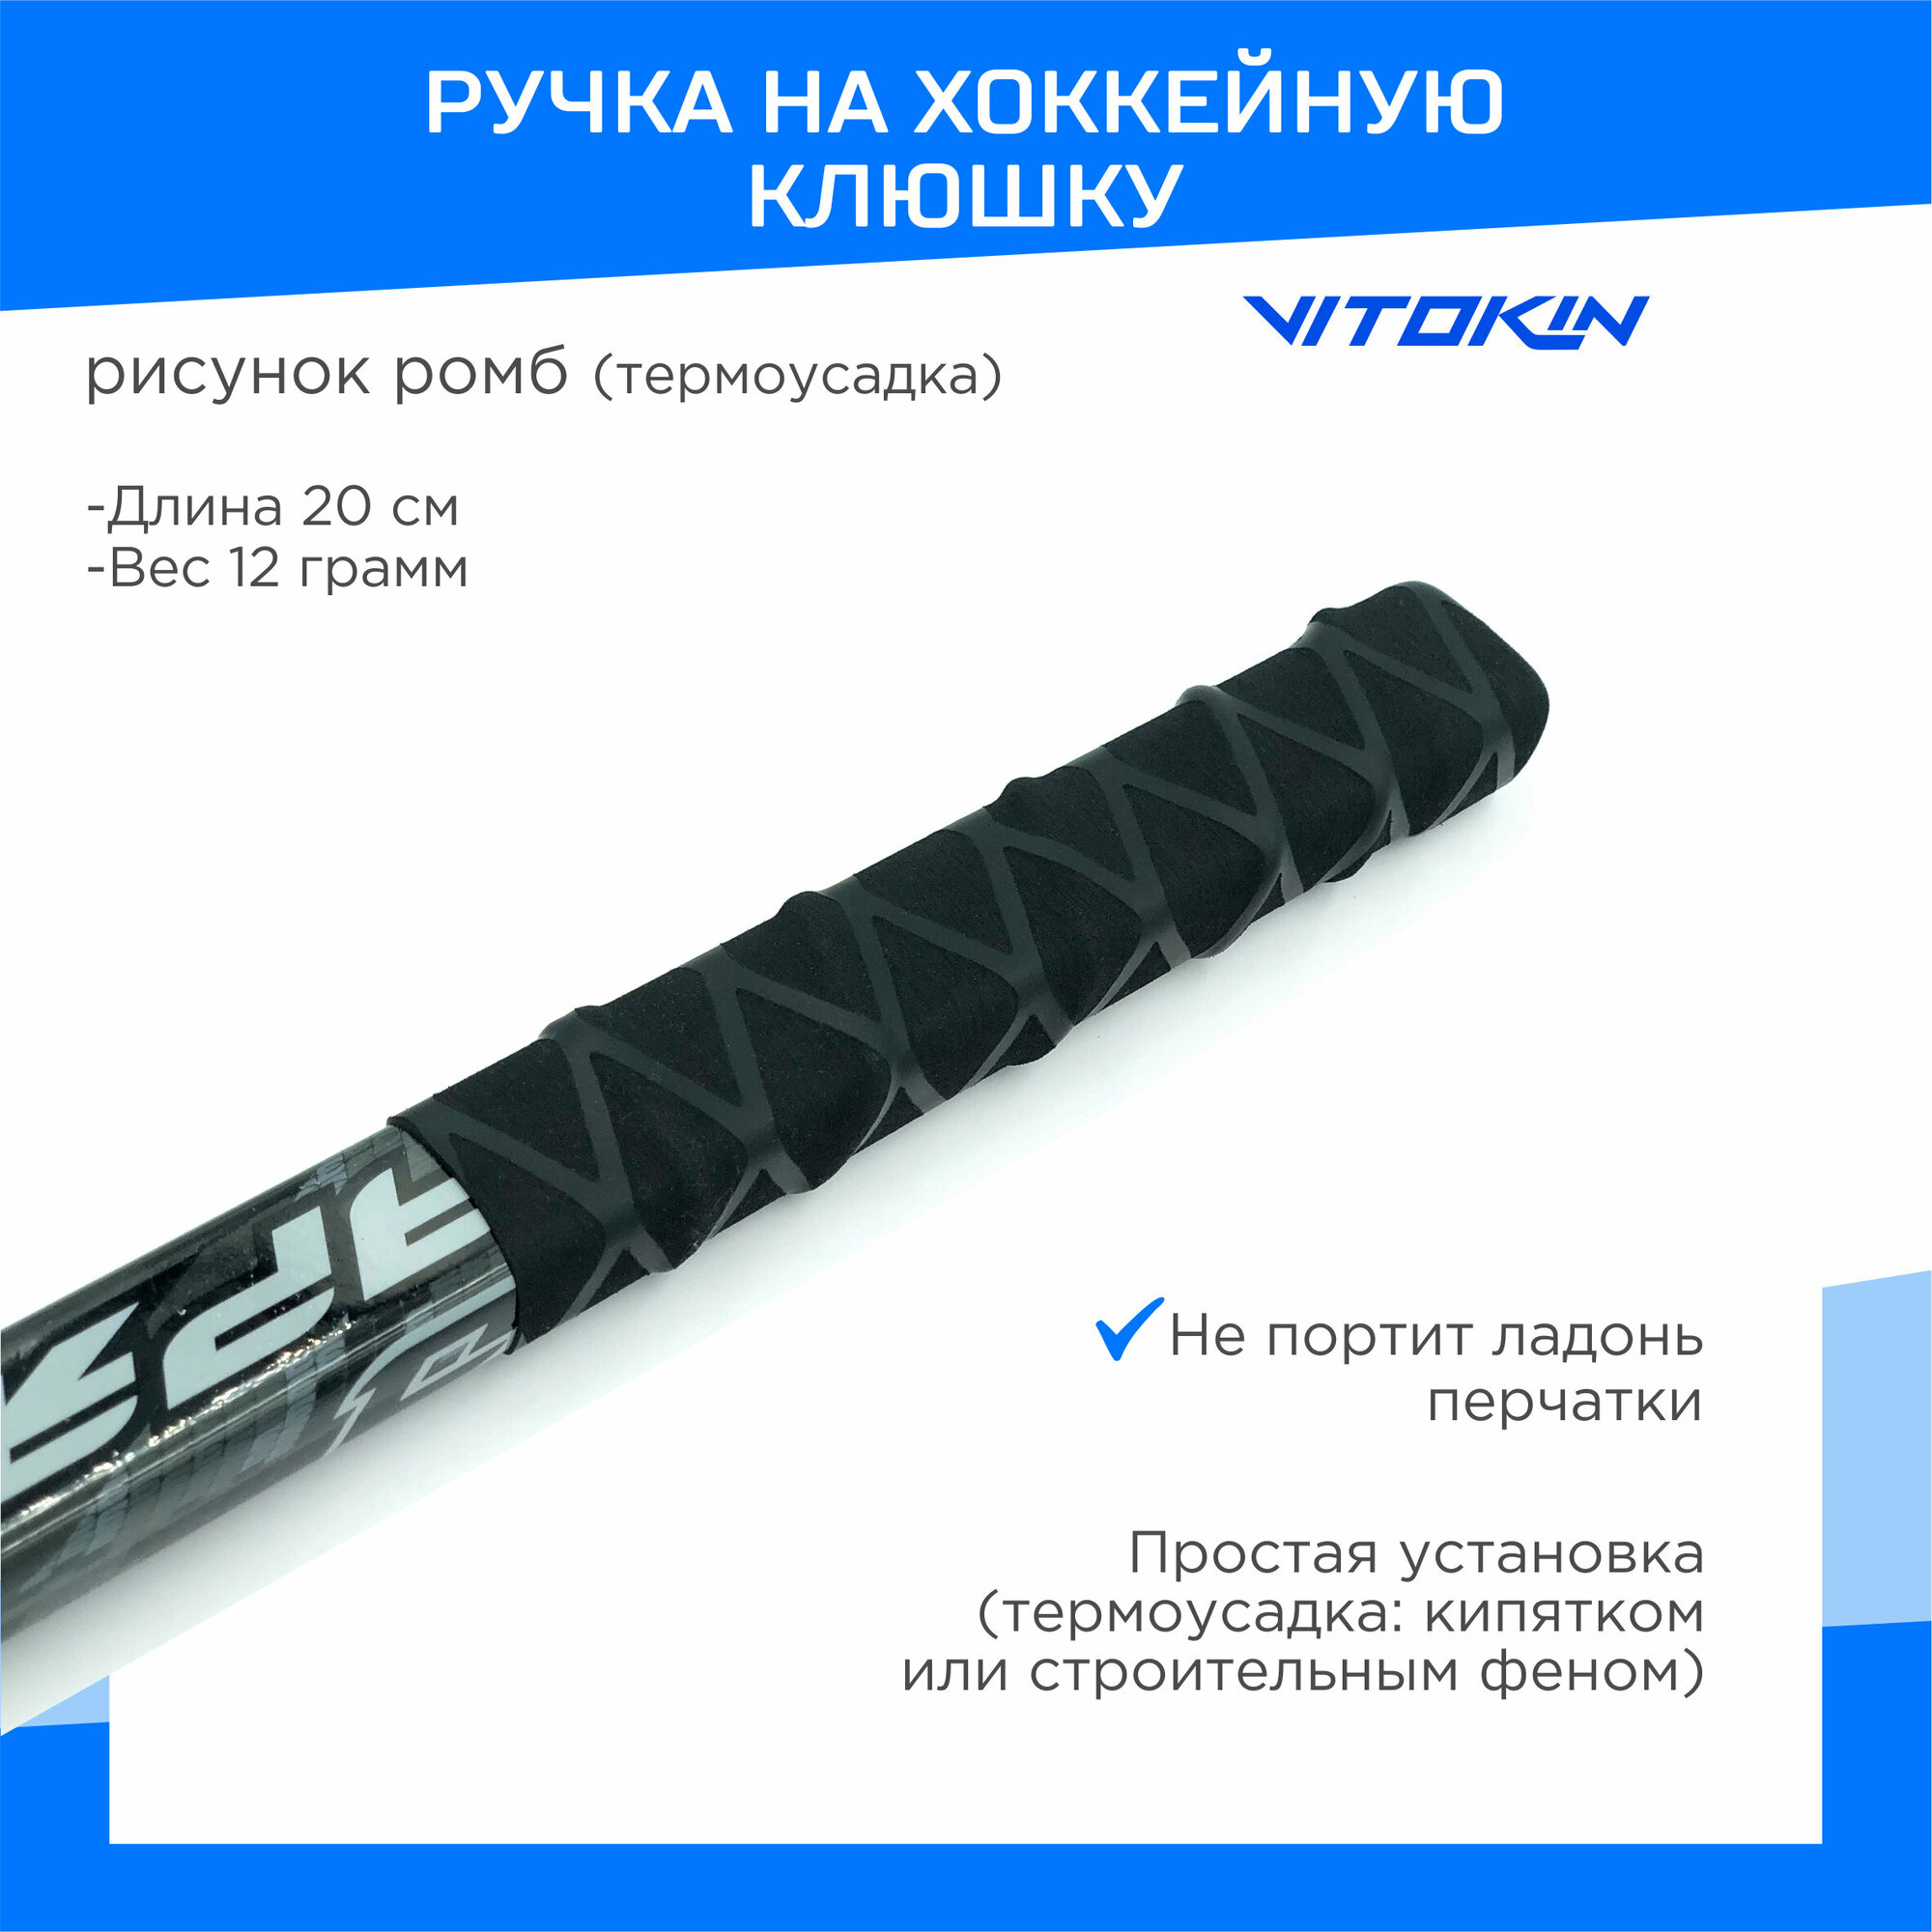 Ручка на хоккейную клюшку с термоусадкой VITOKIN